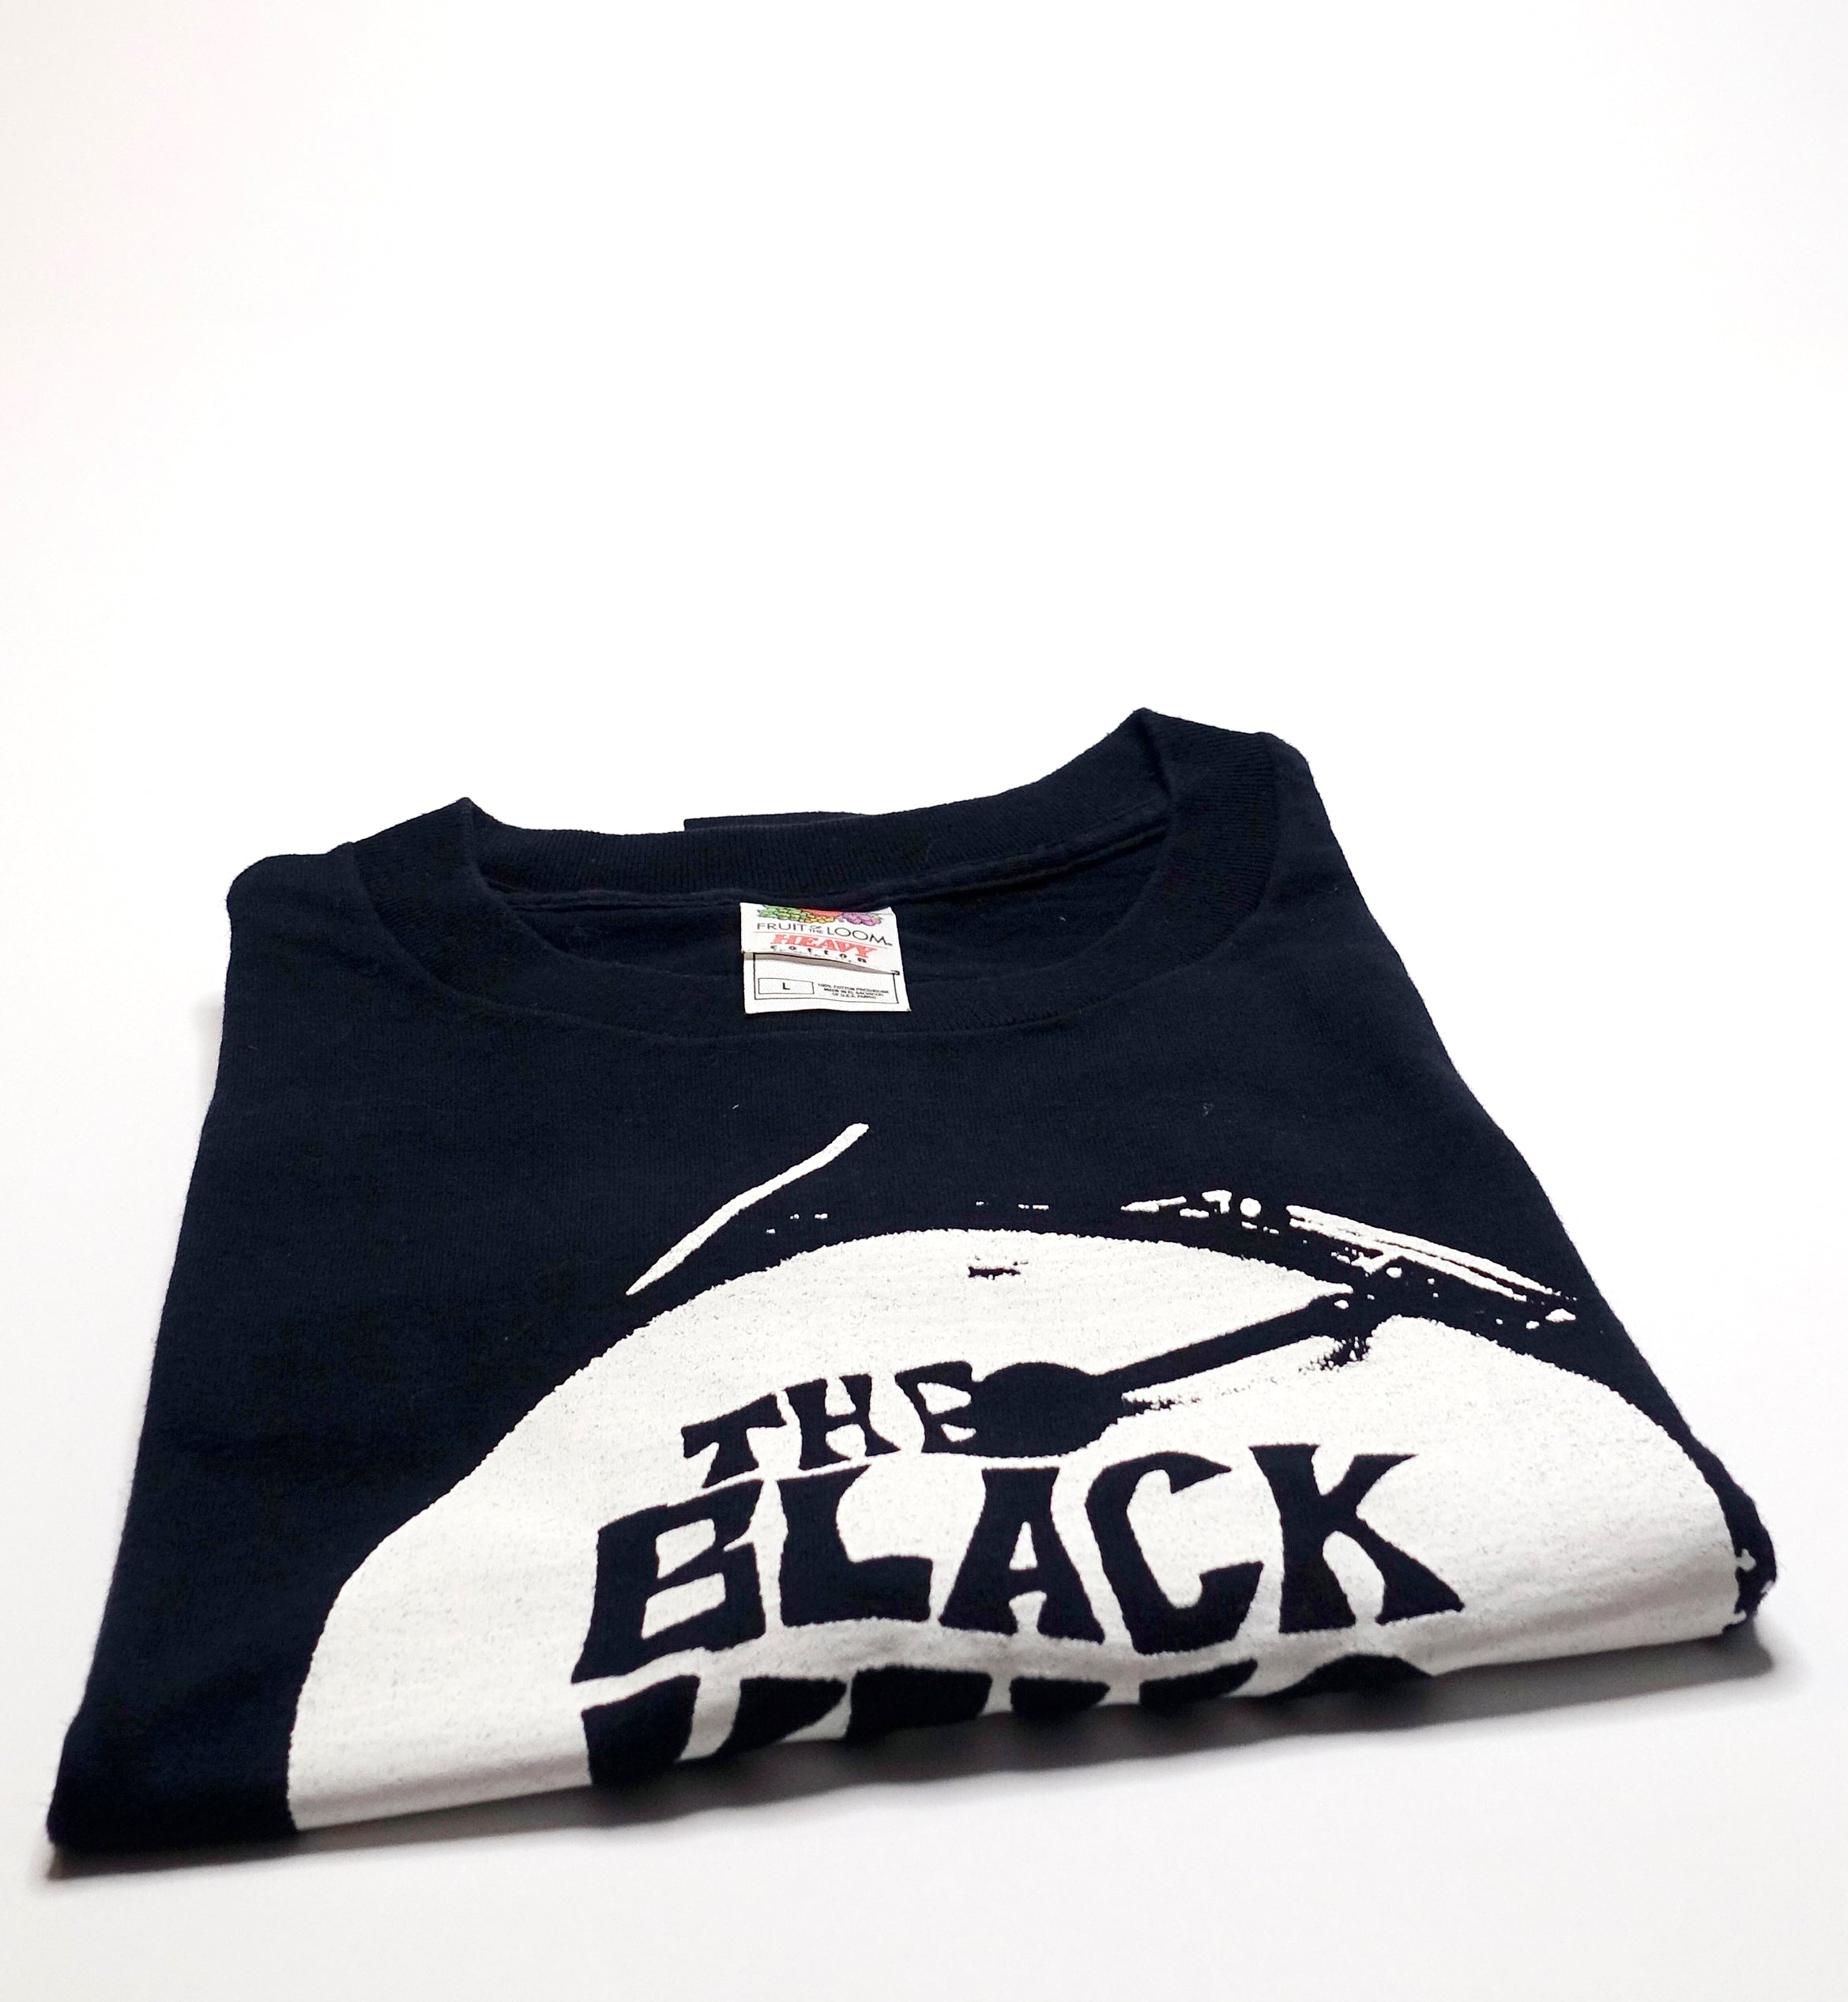 the Black Keys - The Big Come Up 2002 Tour shirt Size Large